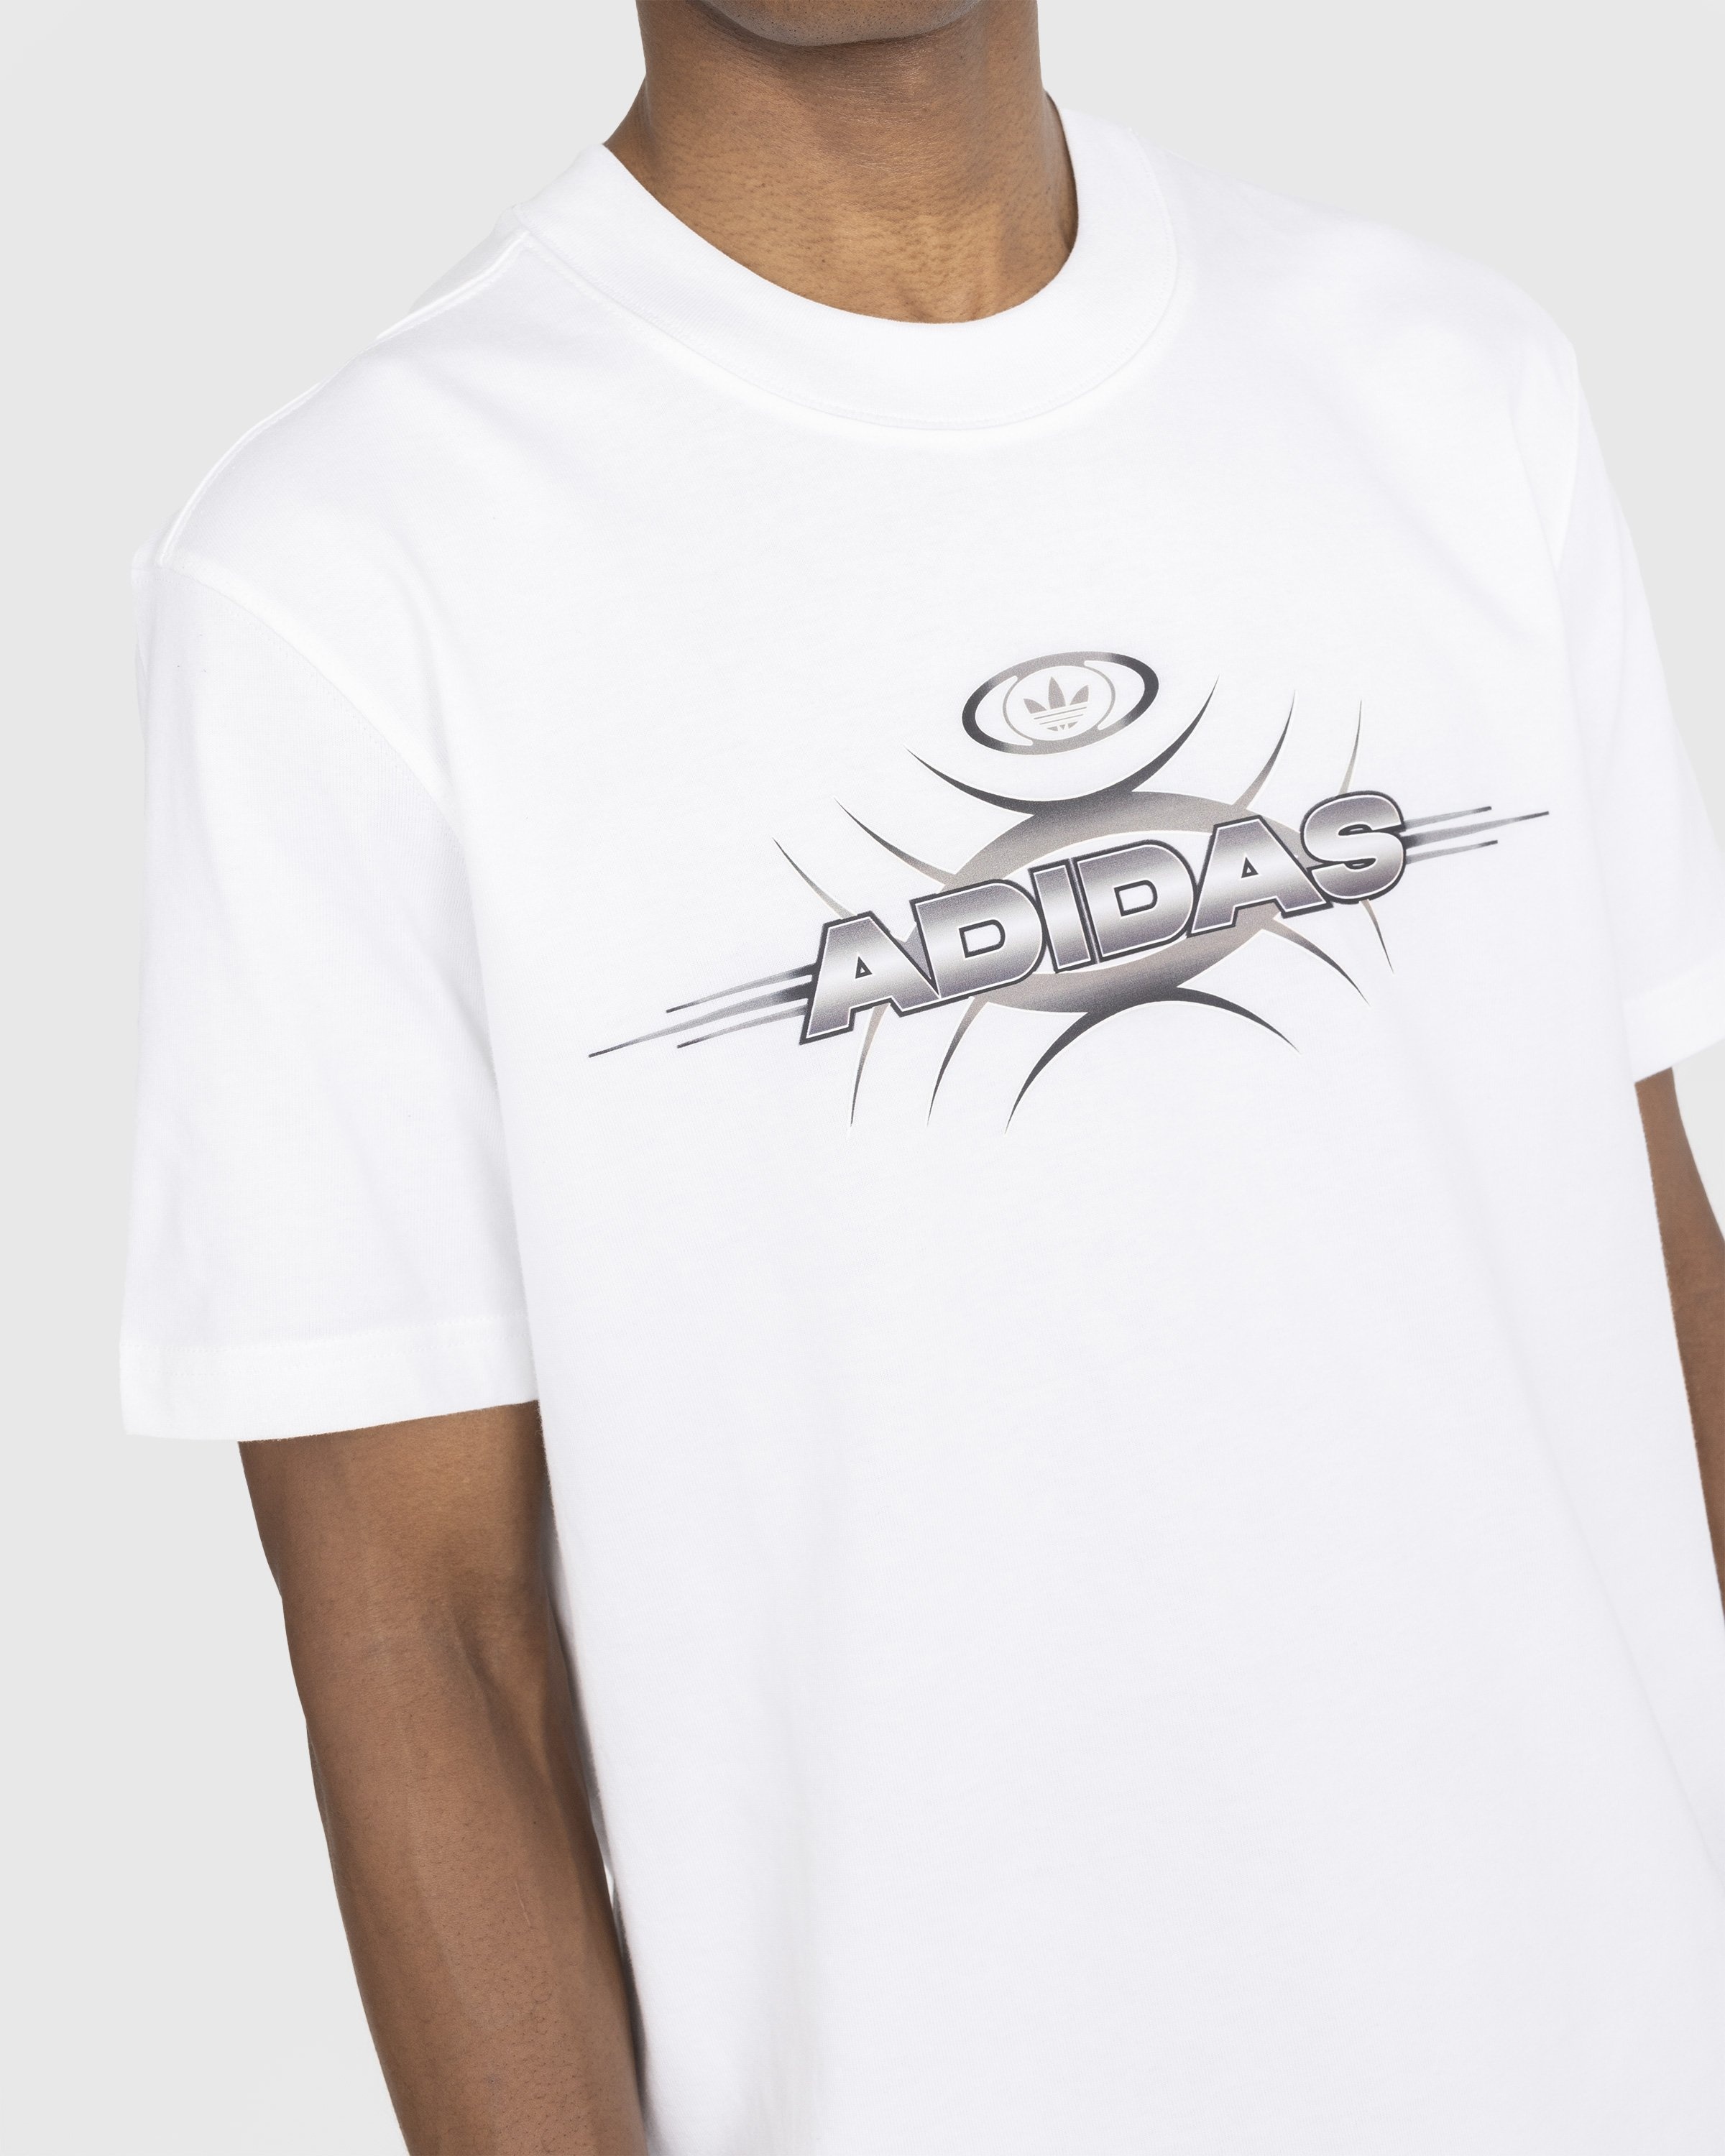 Adidas – Graphic Logo T-Shirt White - Tops - White - Image 4